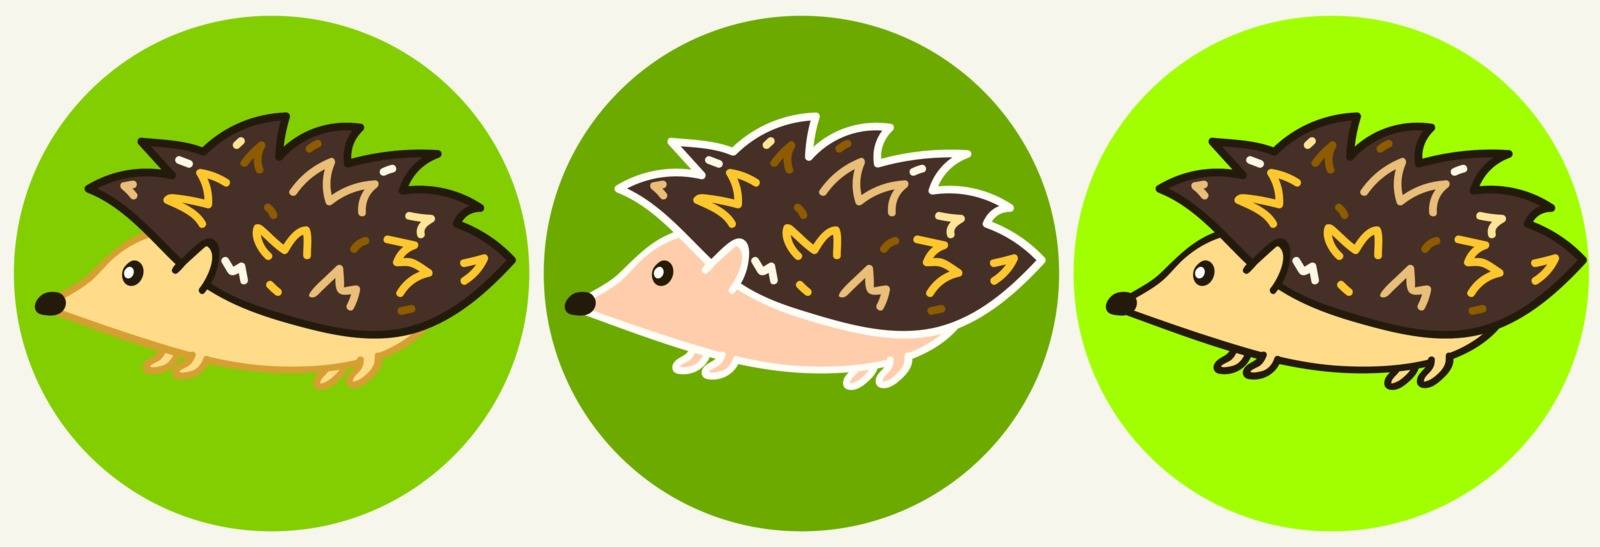 Cute cartoon colorful hedgehog icons, funny childish hedgehog